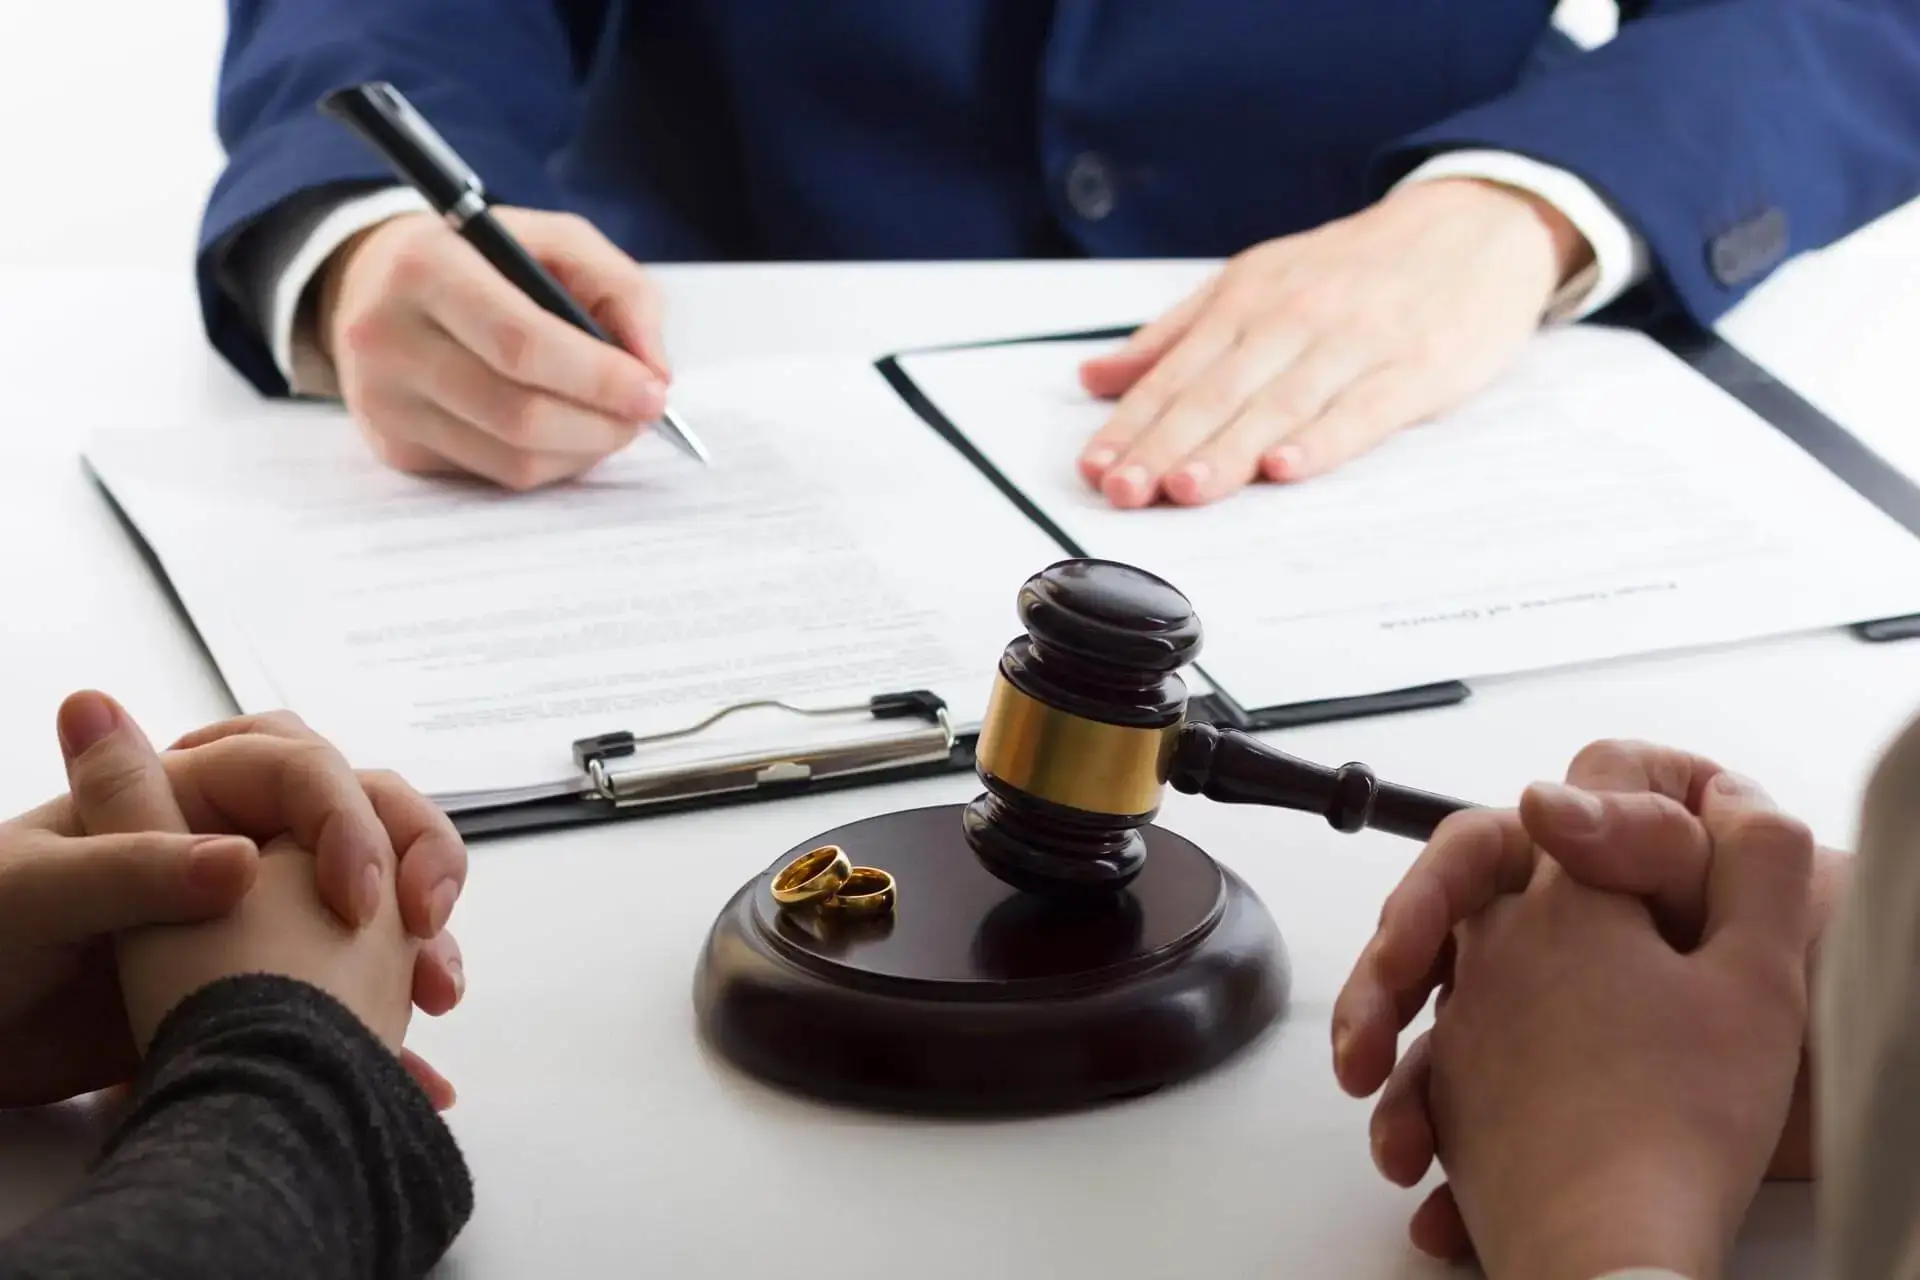 Michigan Indiana Divorce Lawyers Edwardsburg Attorney Near Me South Bend - Edwardsburg Michigan | Criminal Defense | Family Law | LaBre Law Office